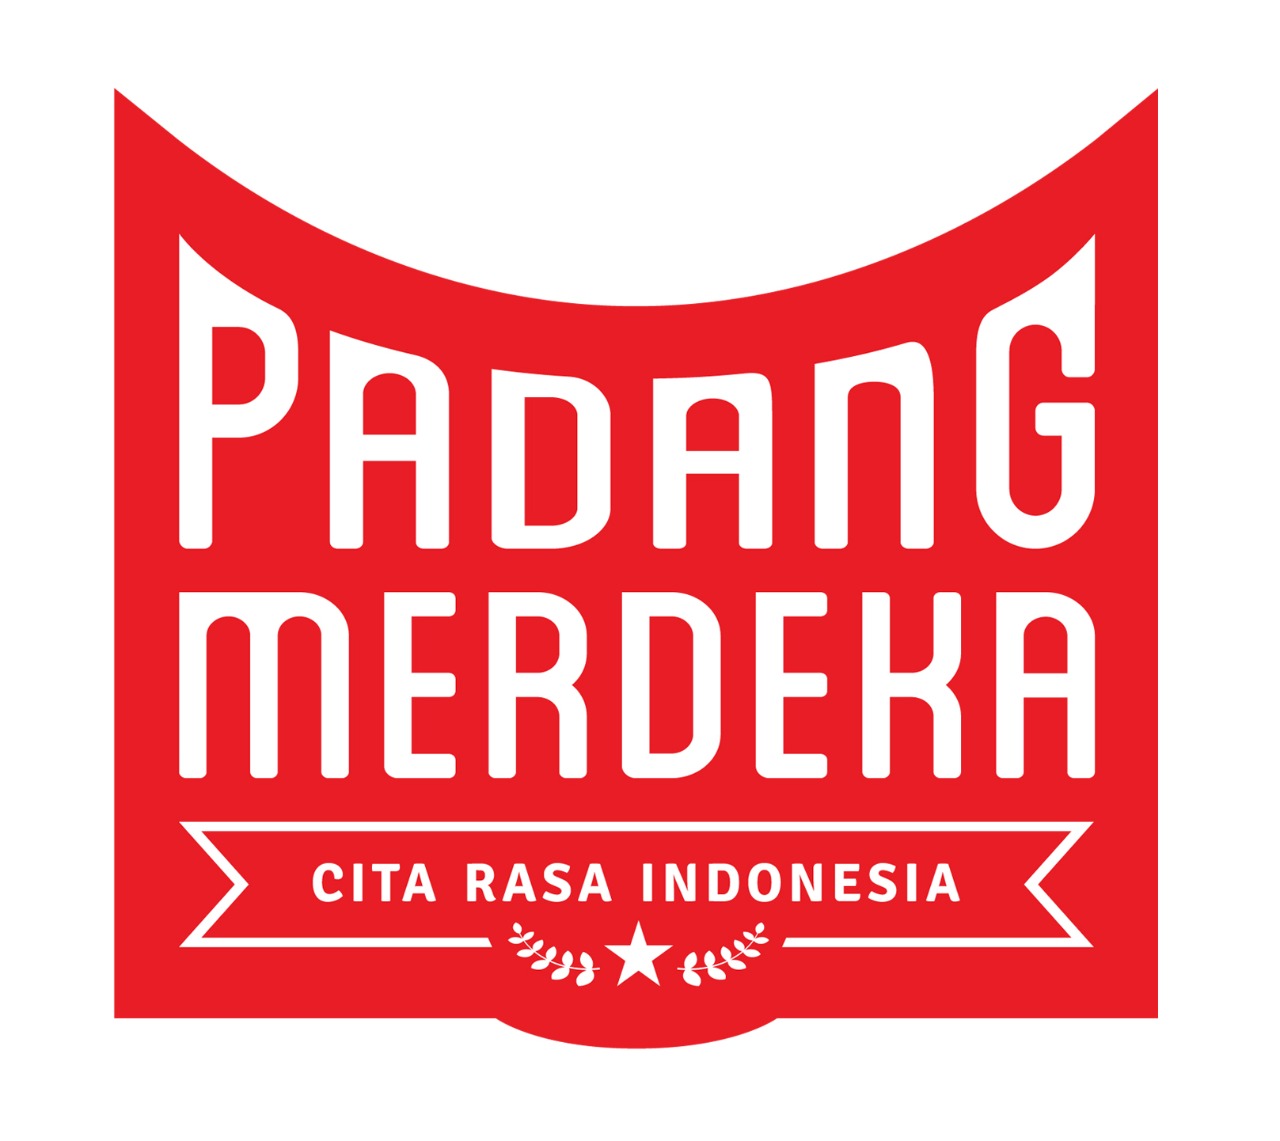 Padang Merdeka Tebet Official Store